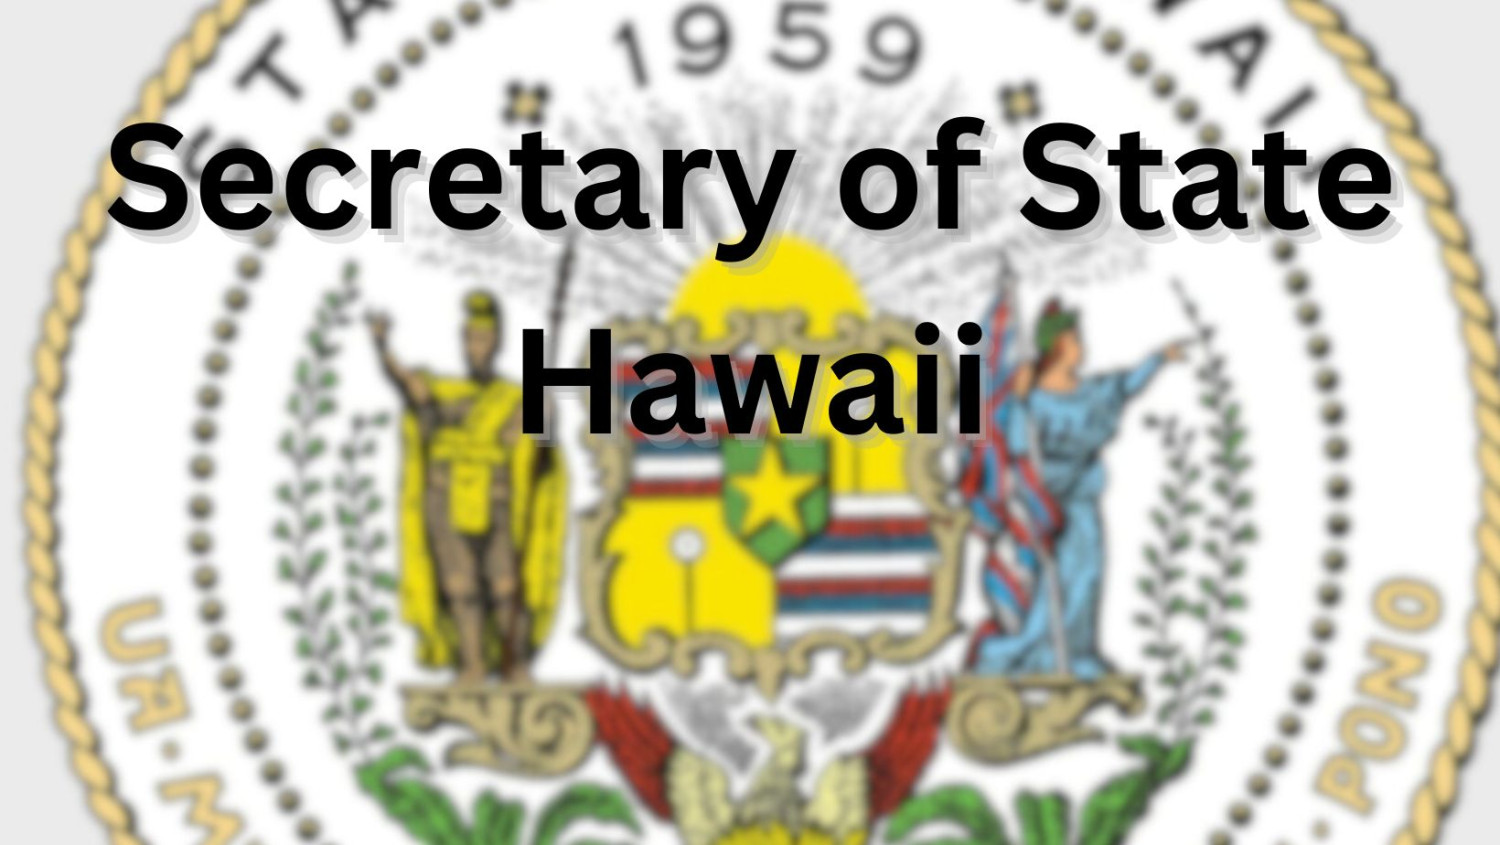 Secretary of State Hawaii